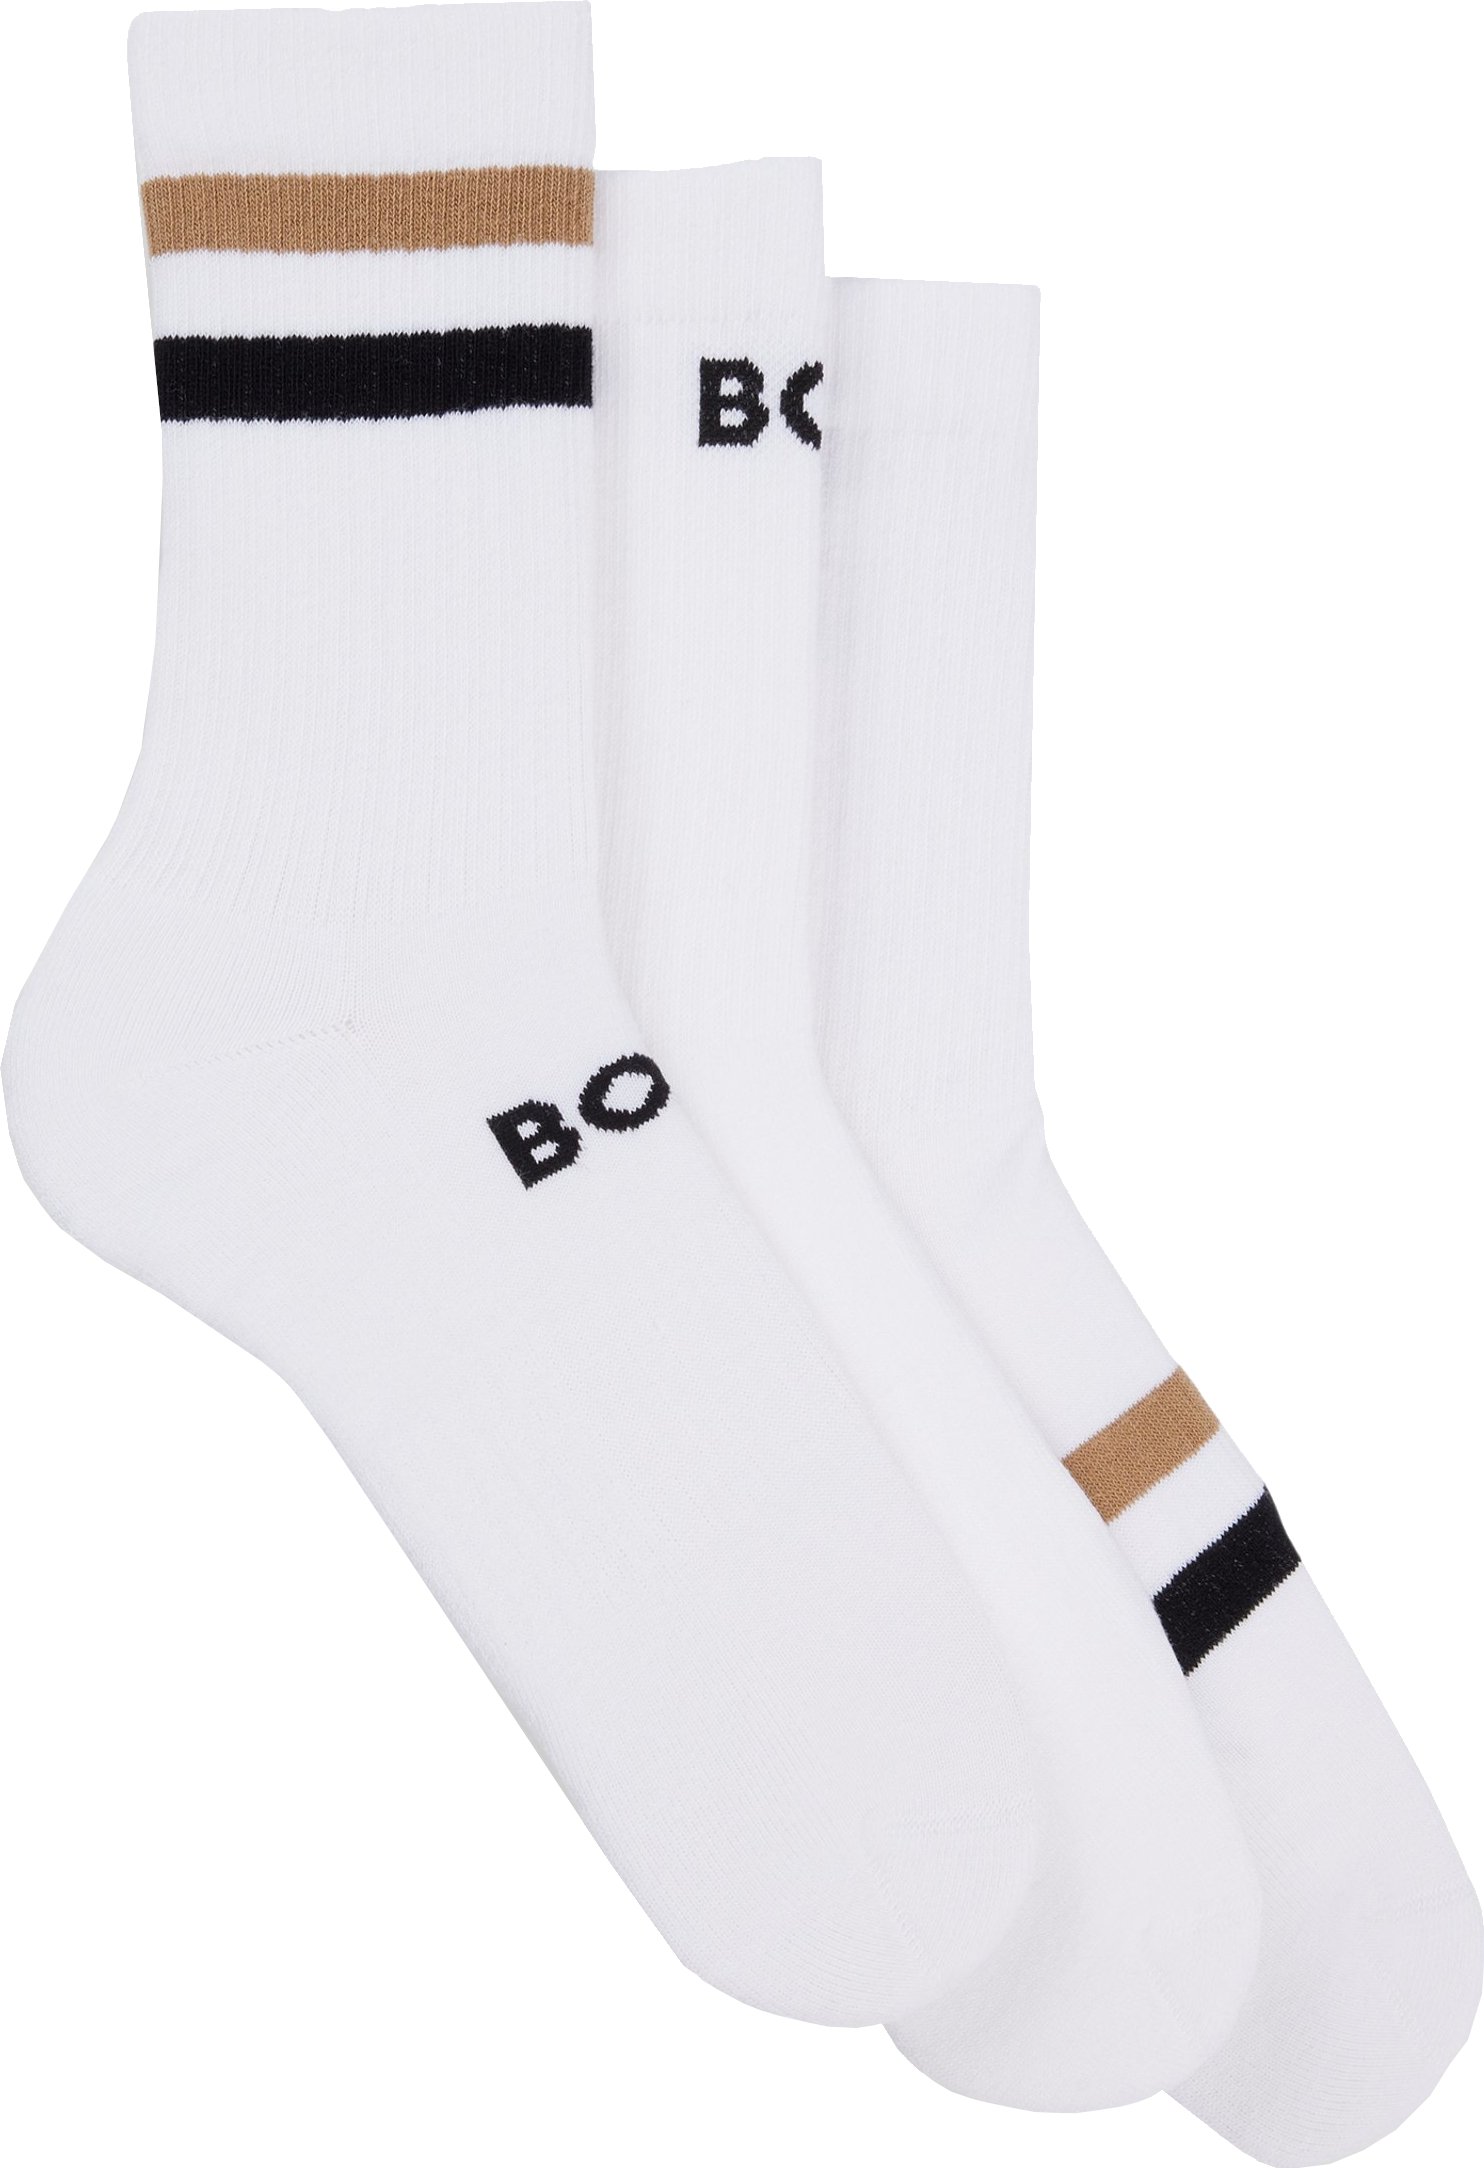 Hugo Boss 3 PACK - pánske ponožky BOSS 50518521-100 43-46